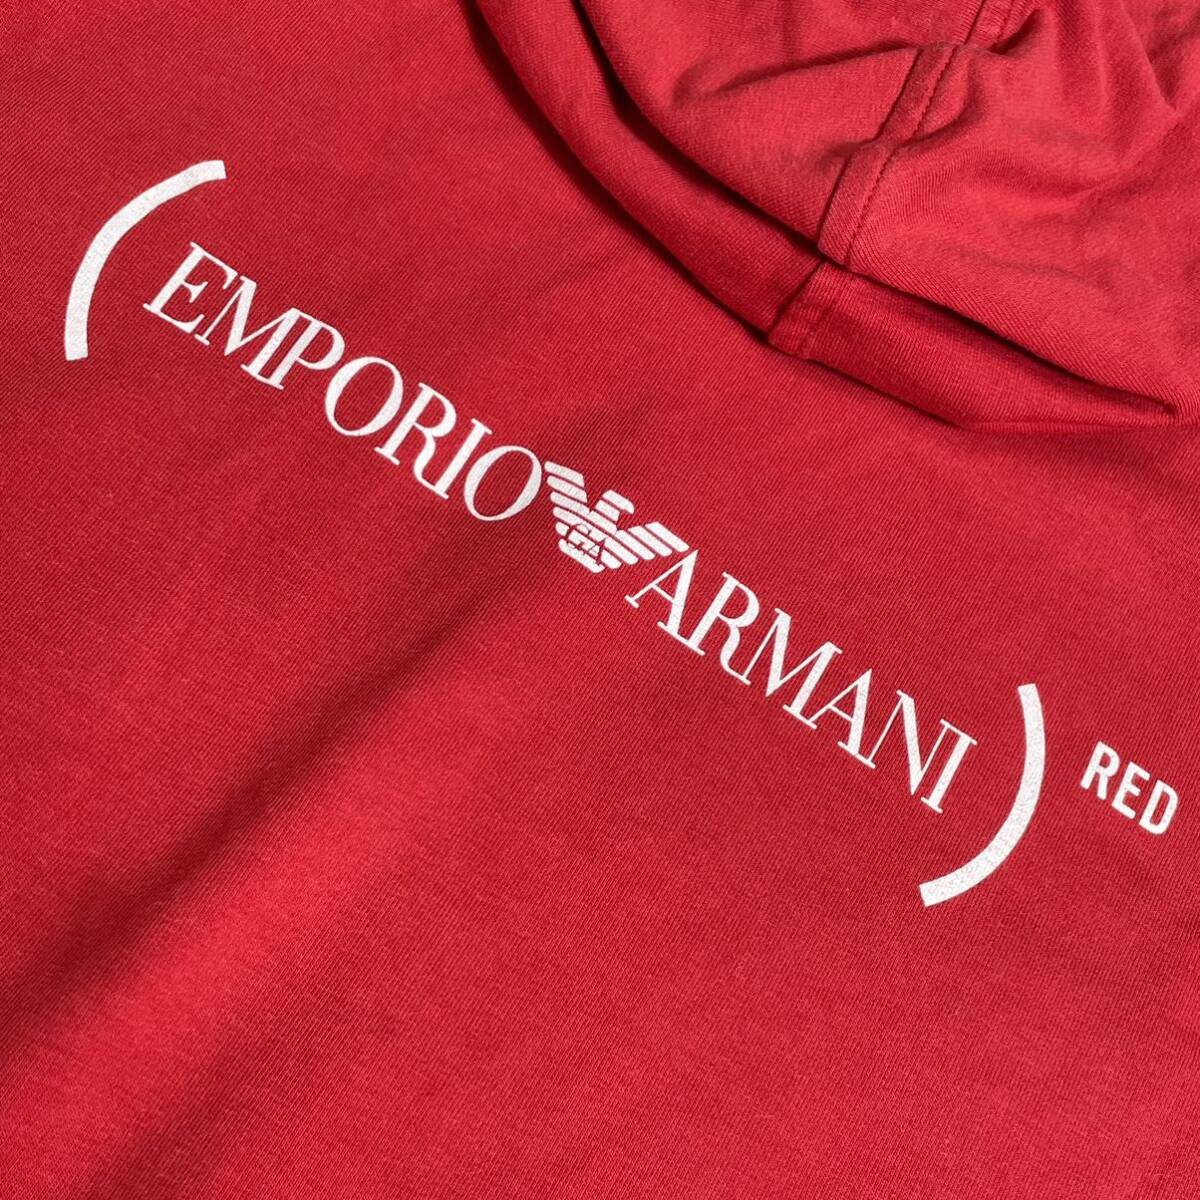 [PRODUCT RED] Emporio Armani pull over Parker f-ti sweat Eagle Logo the back side red red EMPORIO ARMANI men's M